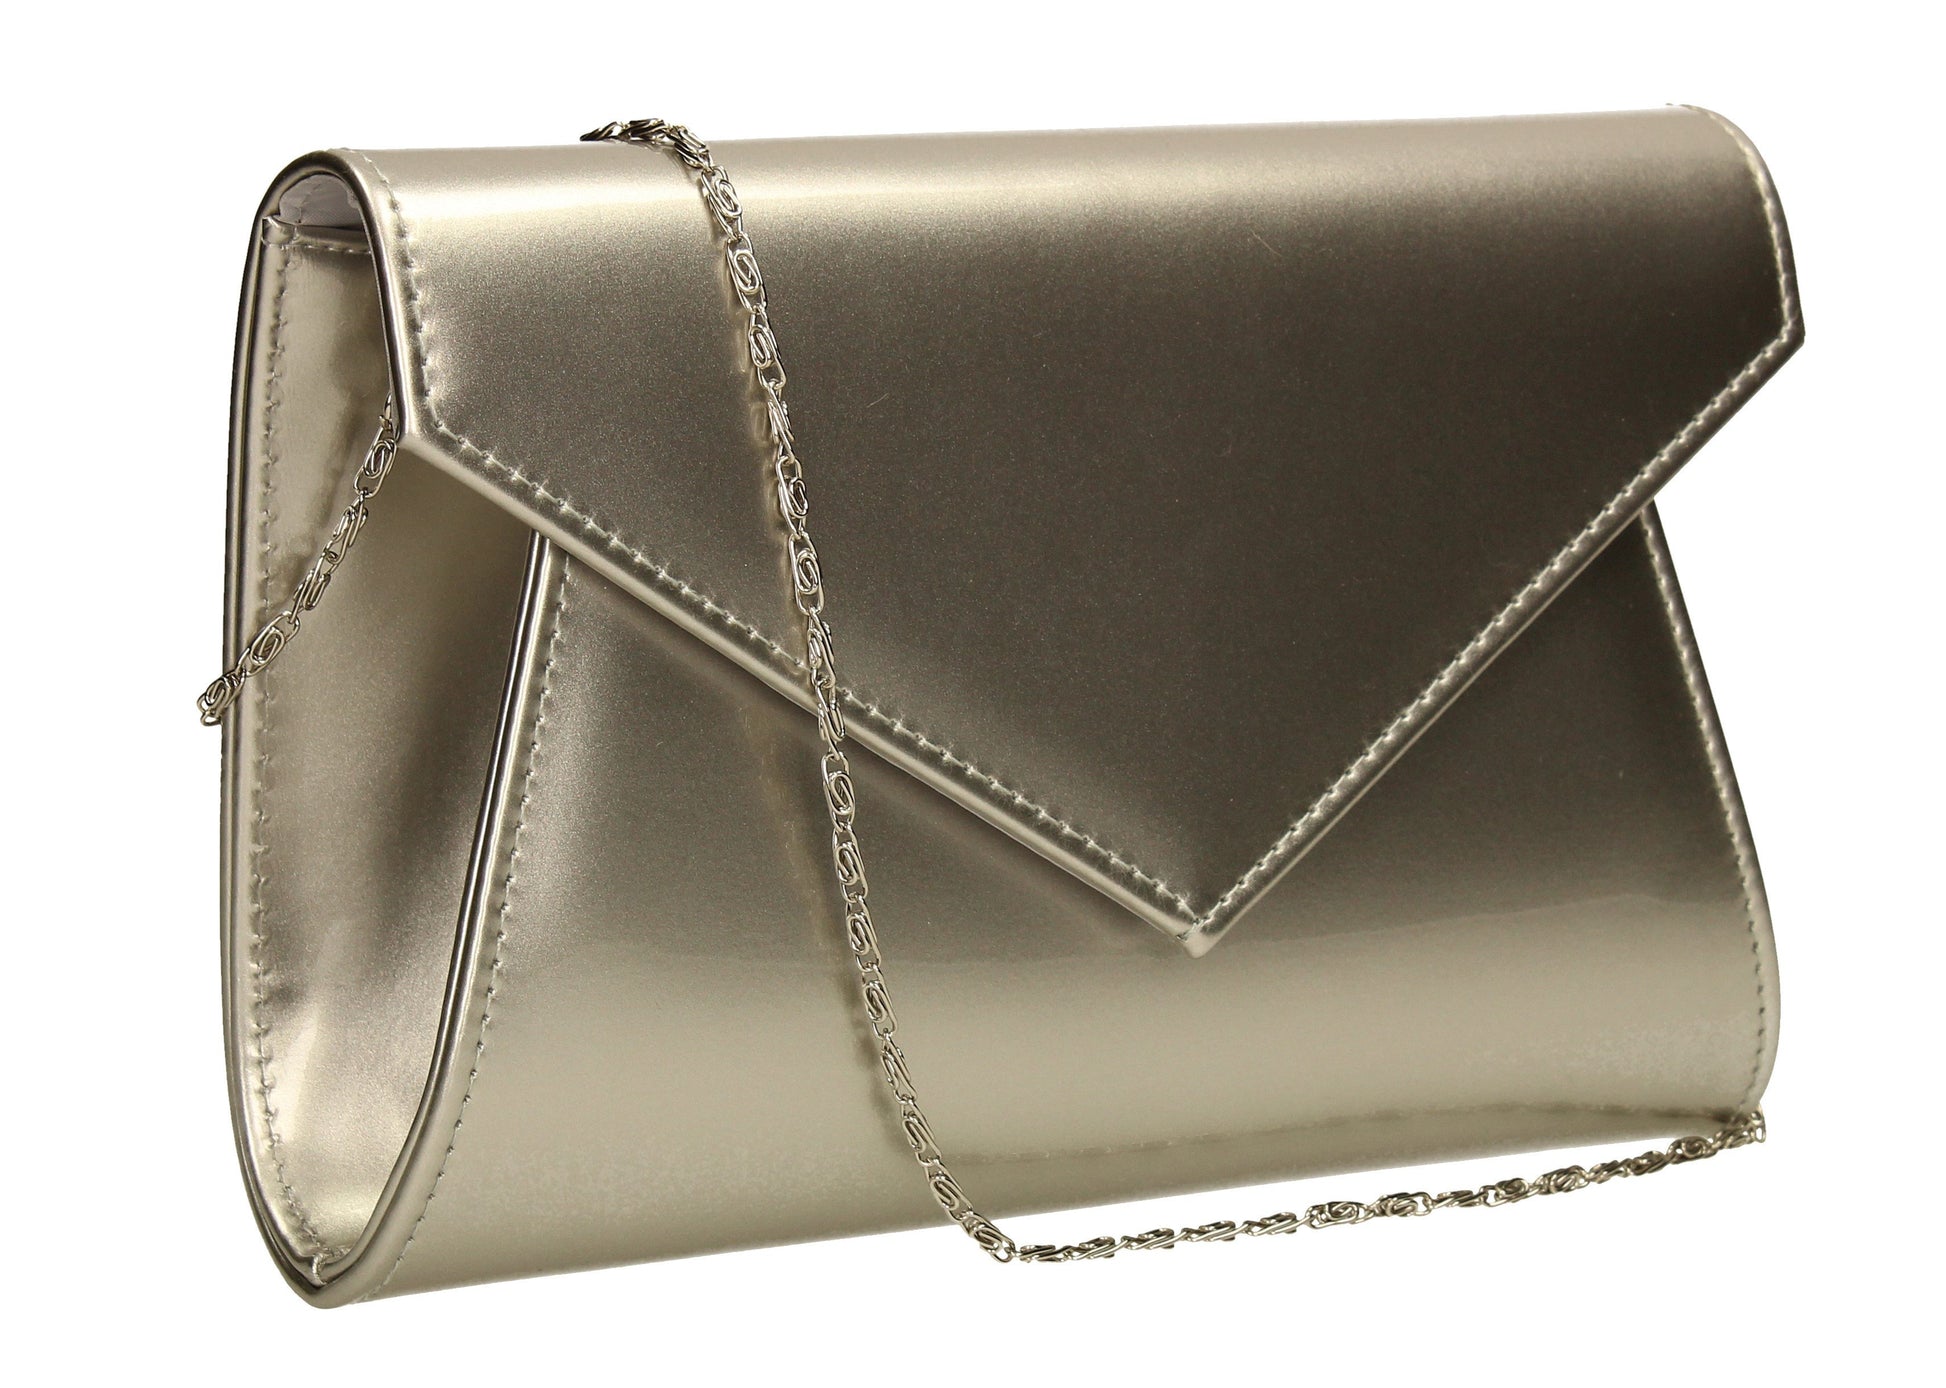 SWANKYSWANS Chrissy Envelope Clutch Bag Silver Cute Cheap Clutch Bag For Weddings School and Work